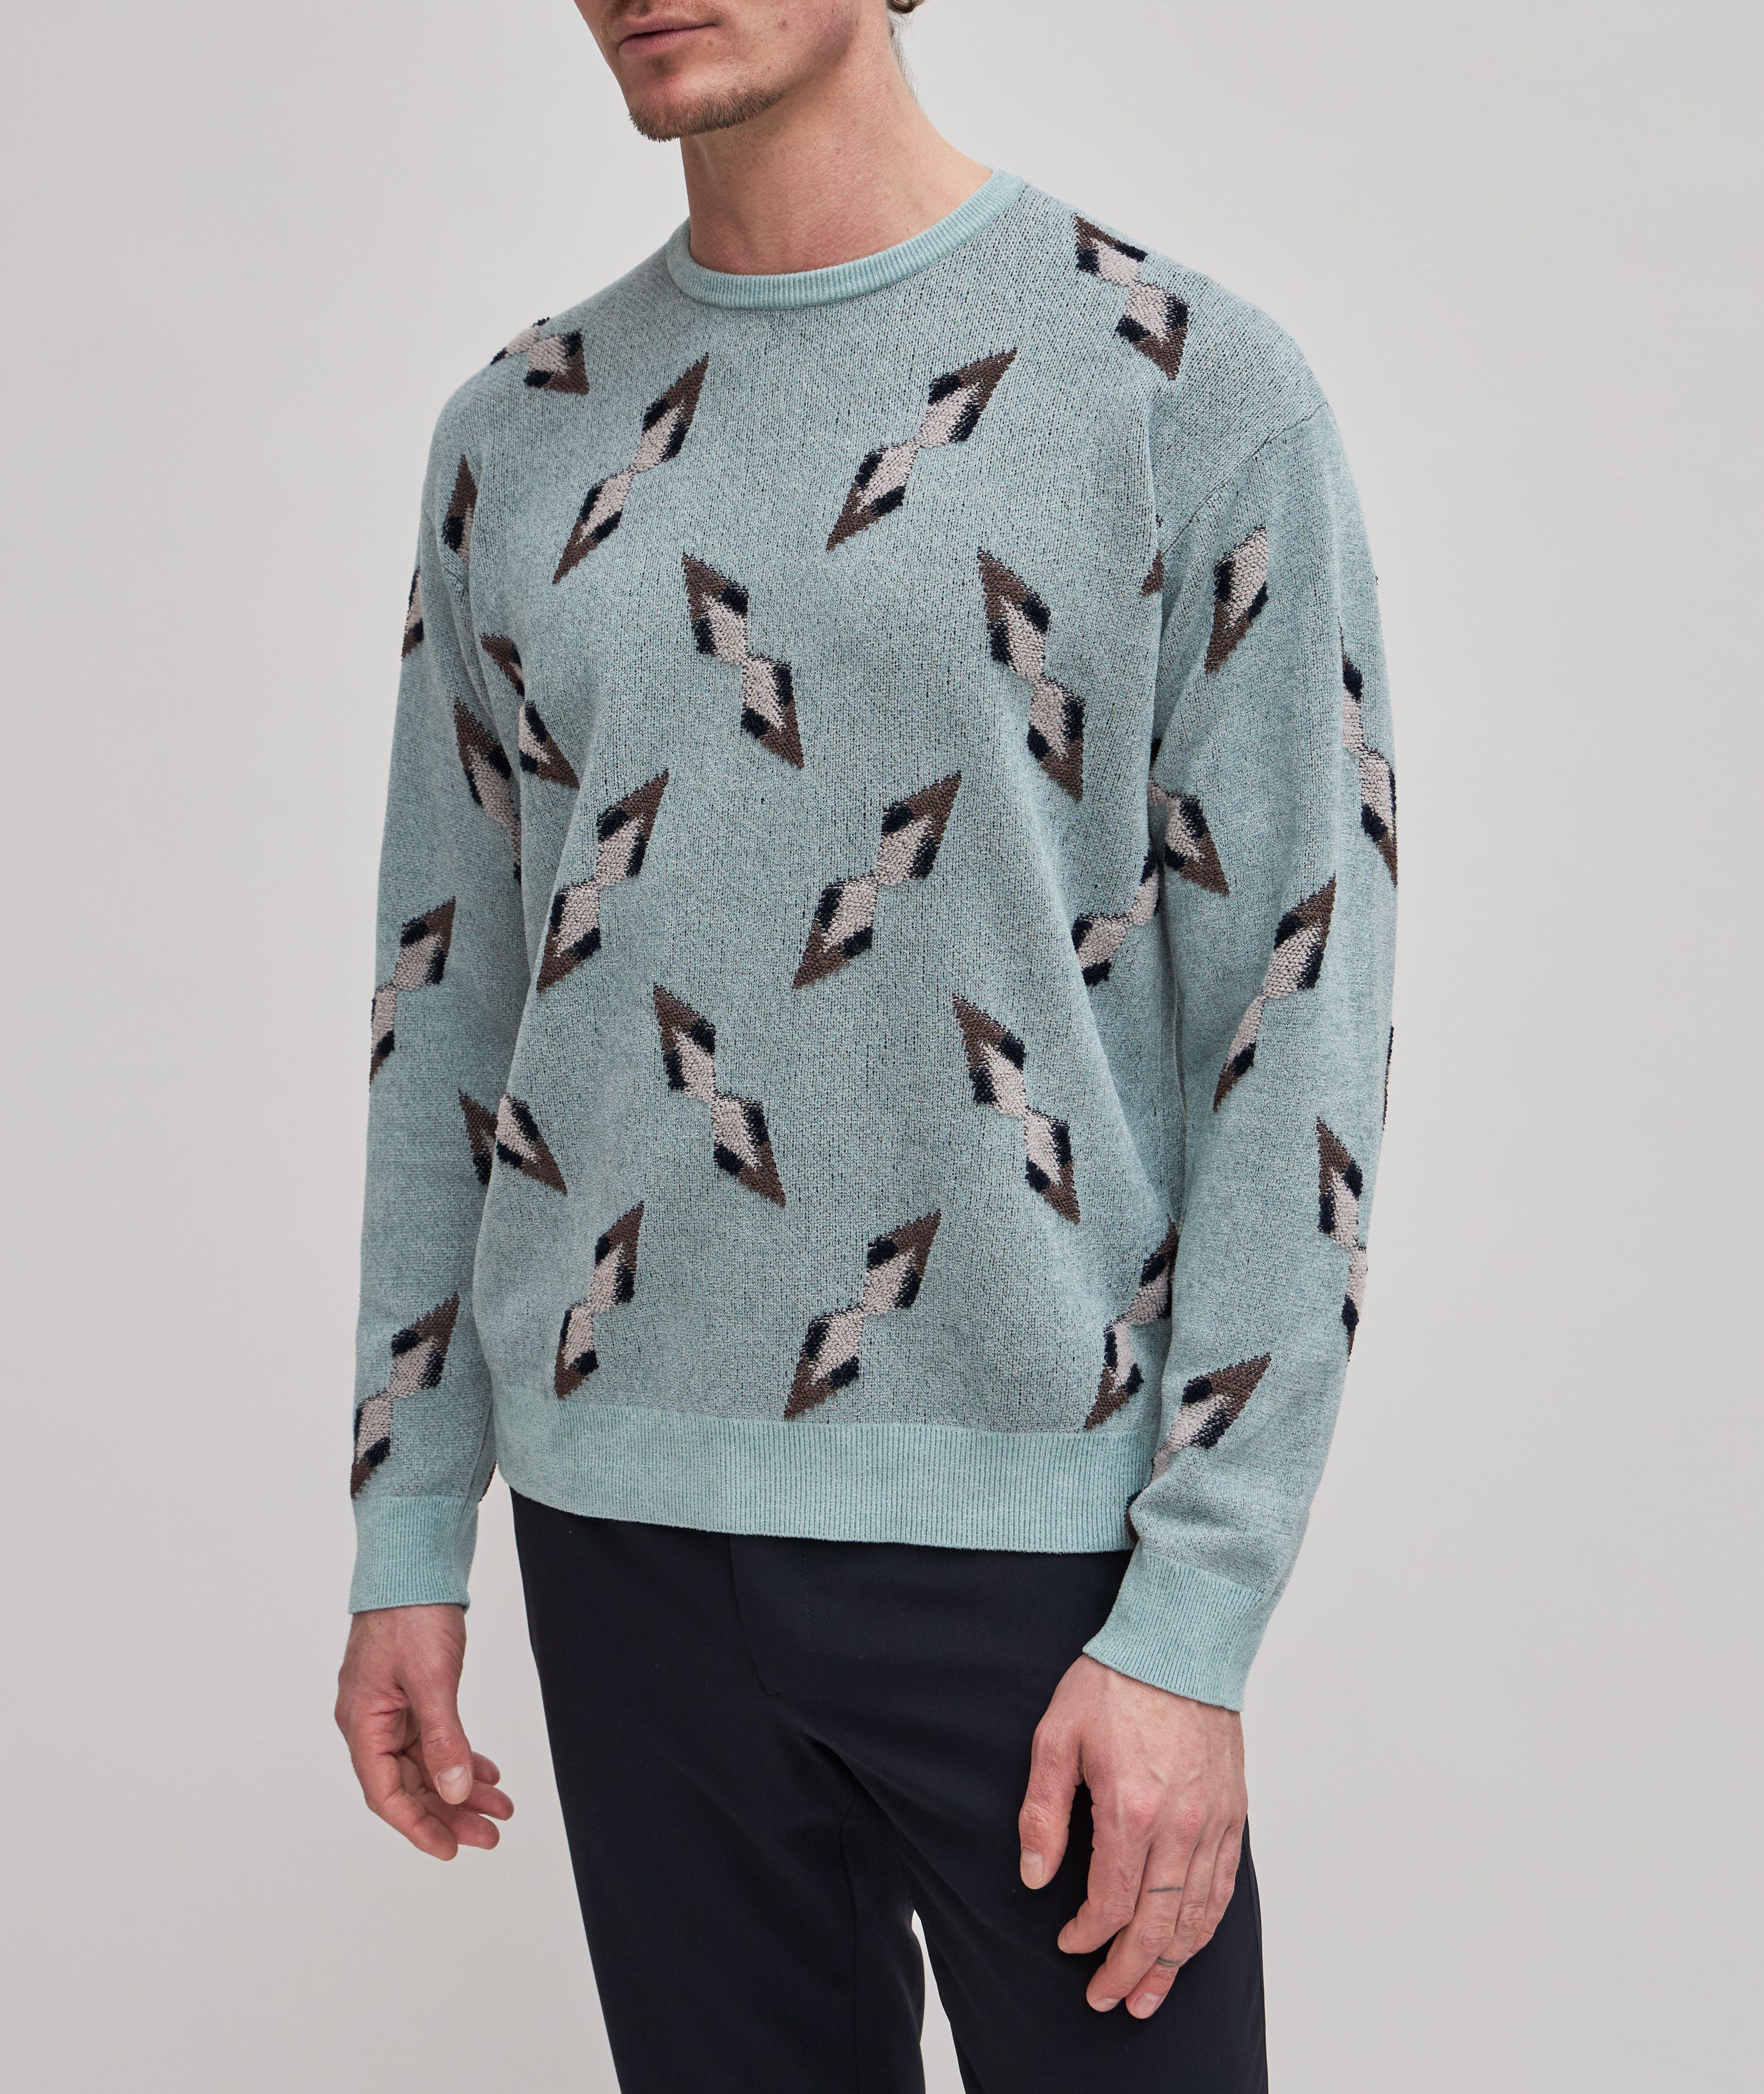 Retro Geometric Jacquard Print Sweater image 1